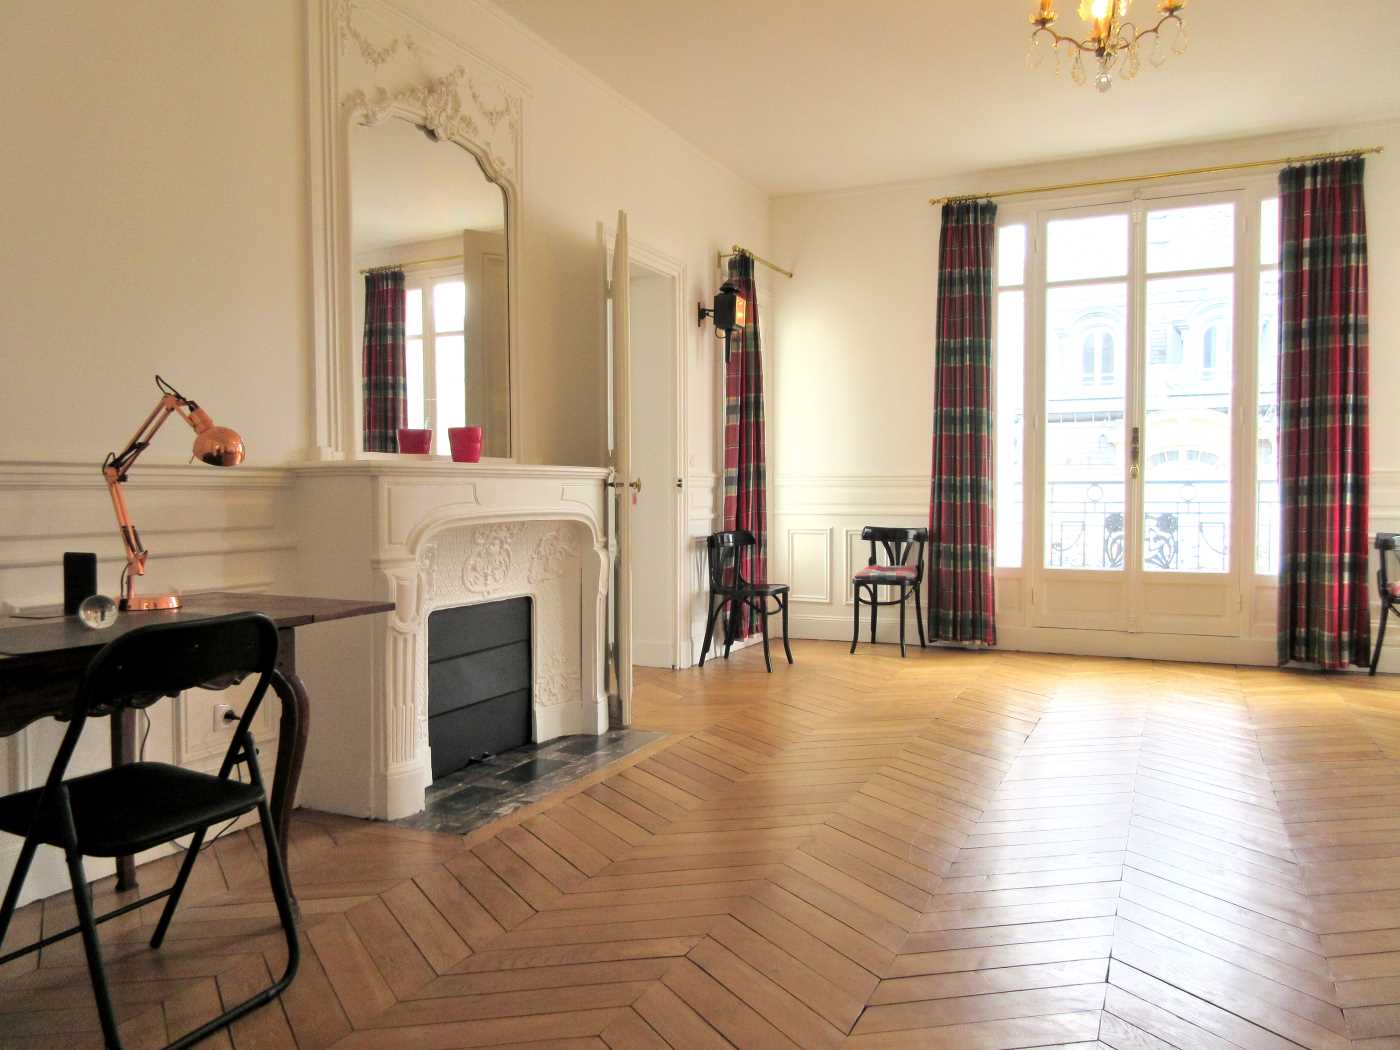 Location Appartement  Meubl   Paris  16 Cattalan Johnson 